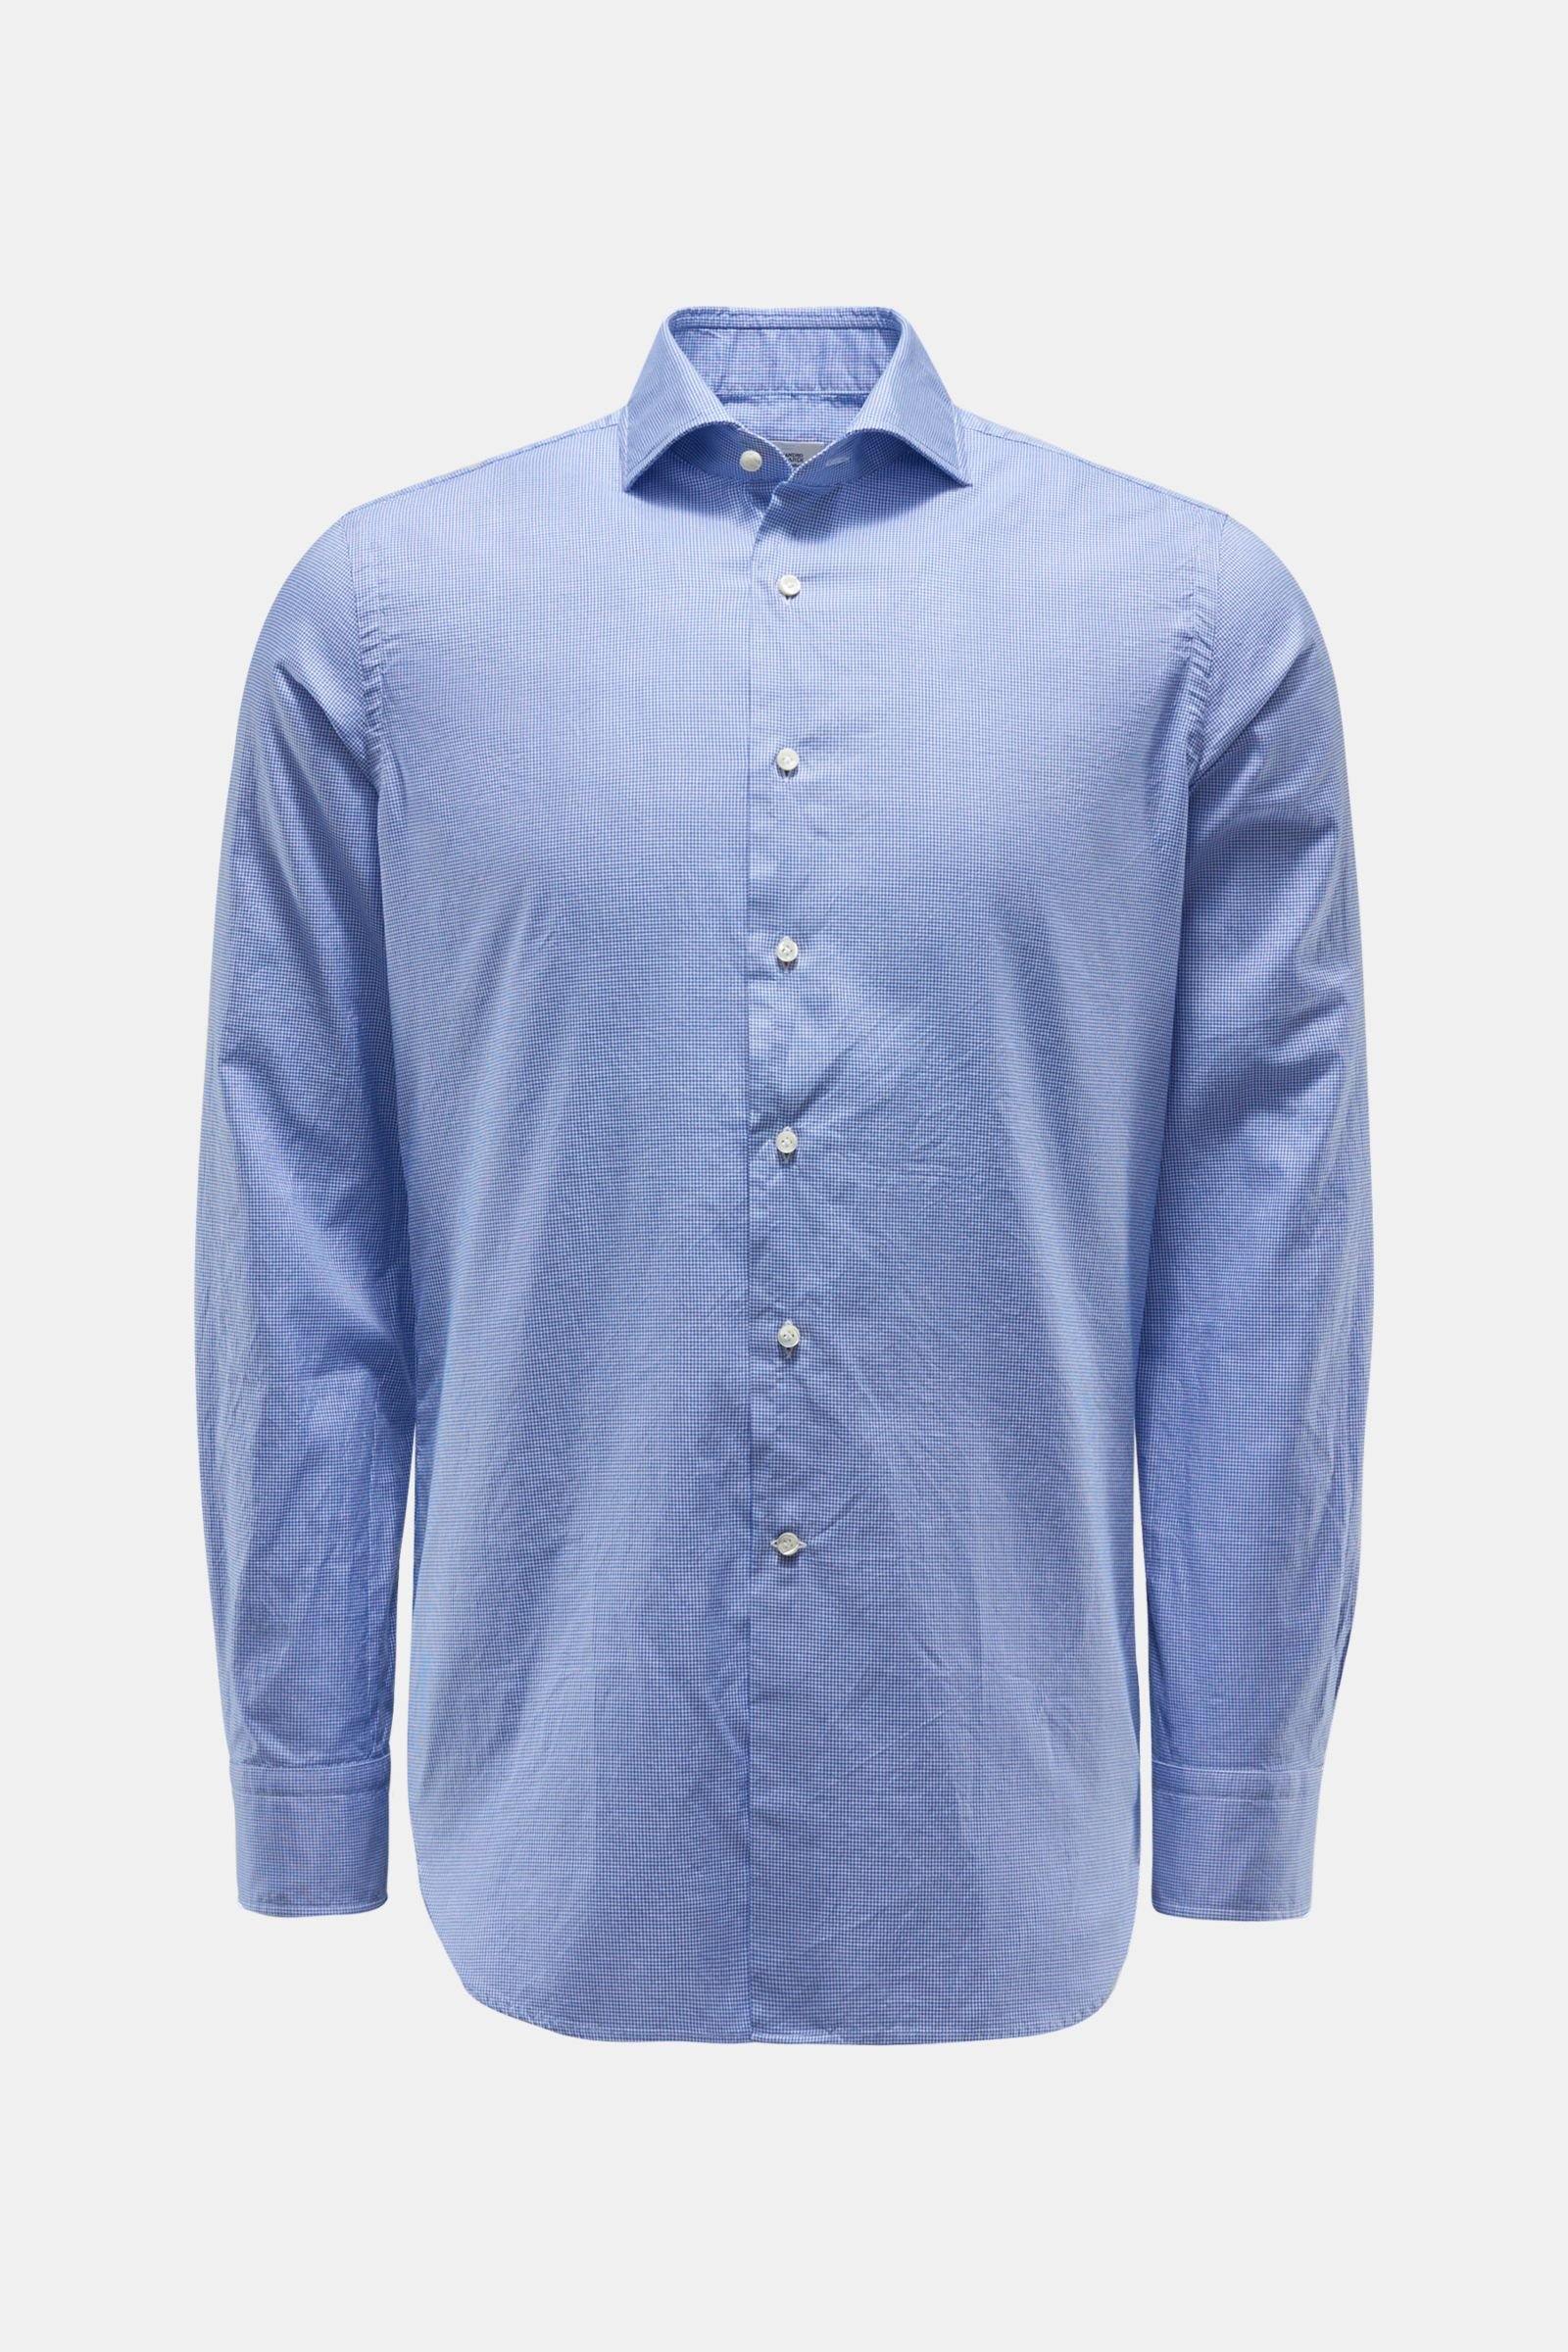 Casual shirt shark collar dark blue/white checked